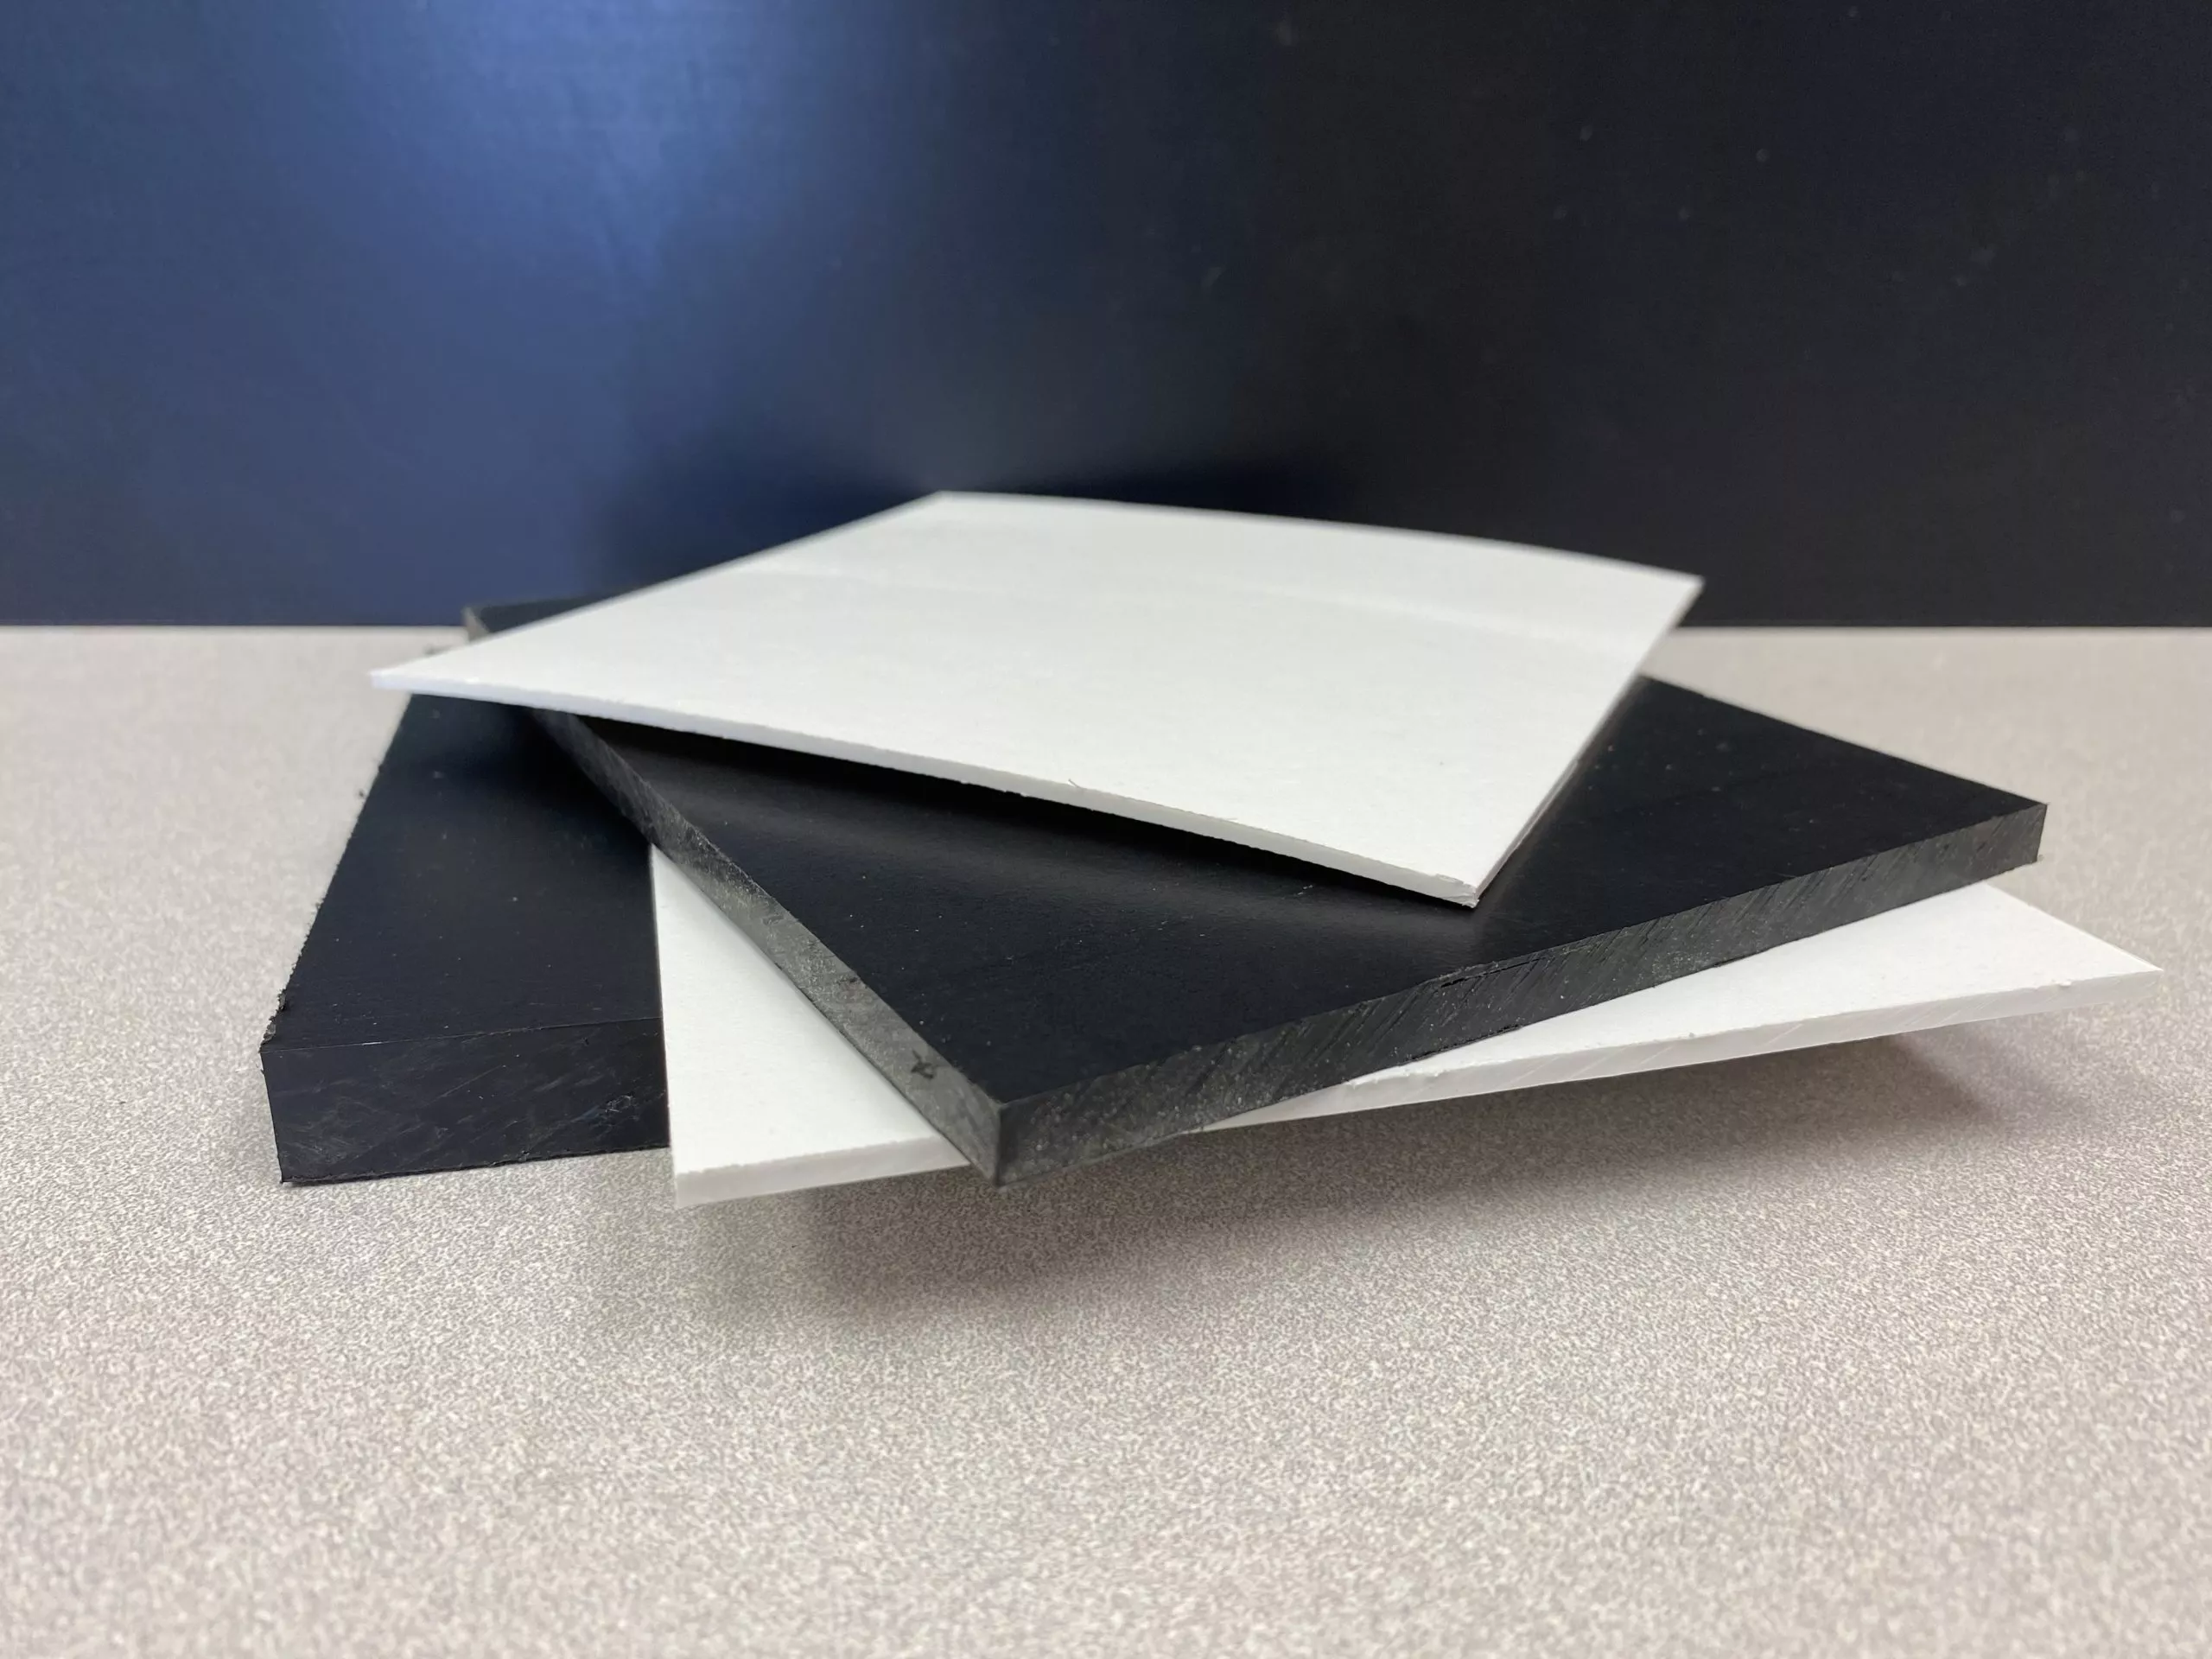 High Density Polyethylene HDPE Plastic Sheet 1/4" x 24" x 36” White Smooth 